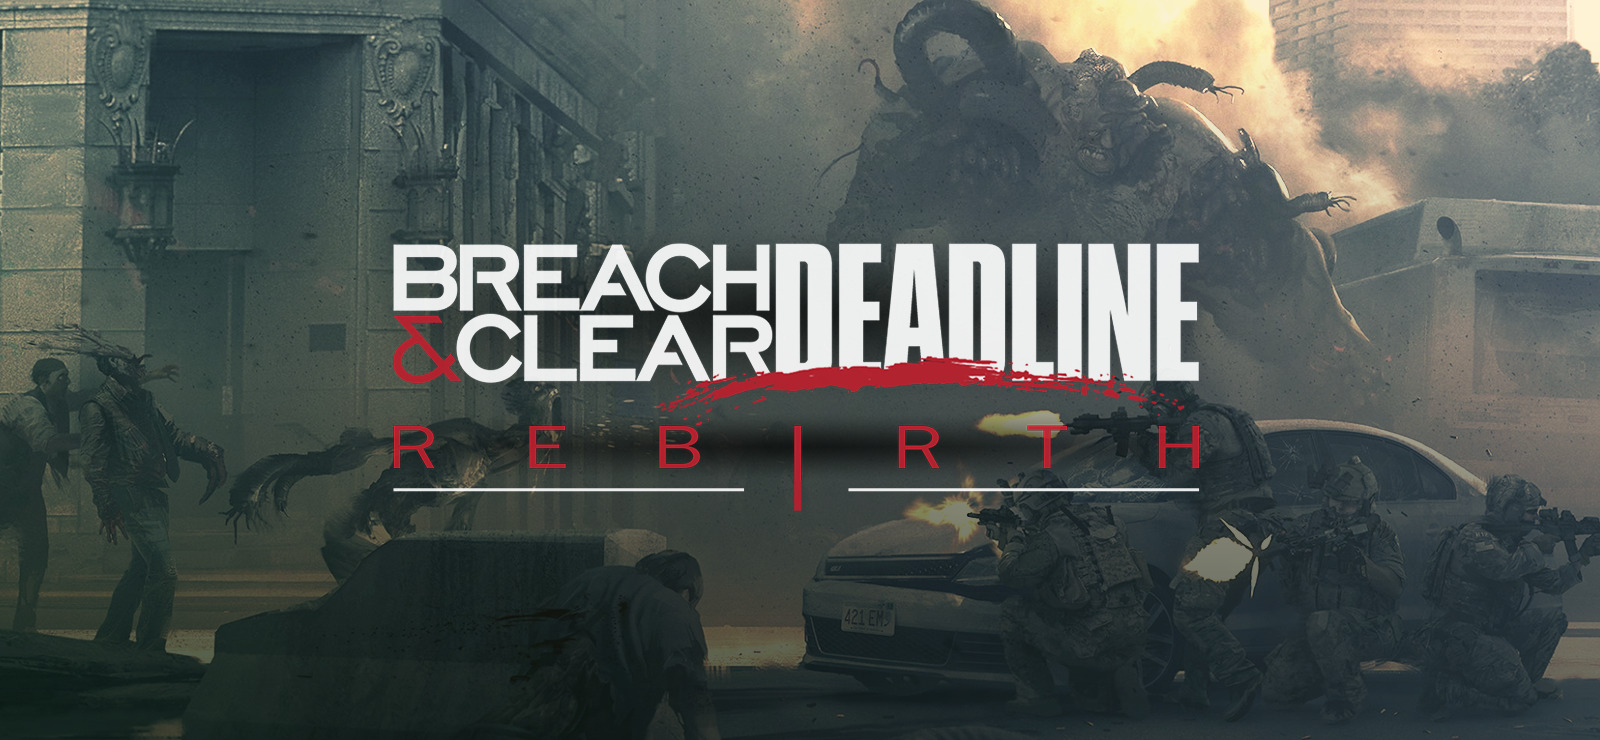 breach and clear deadline sequel